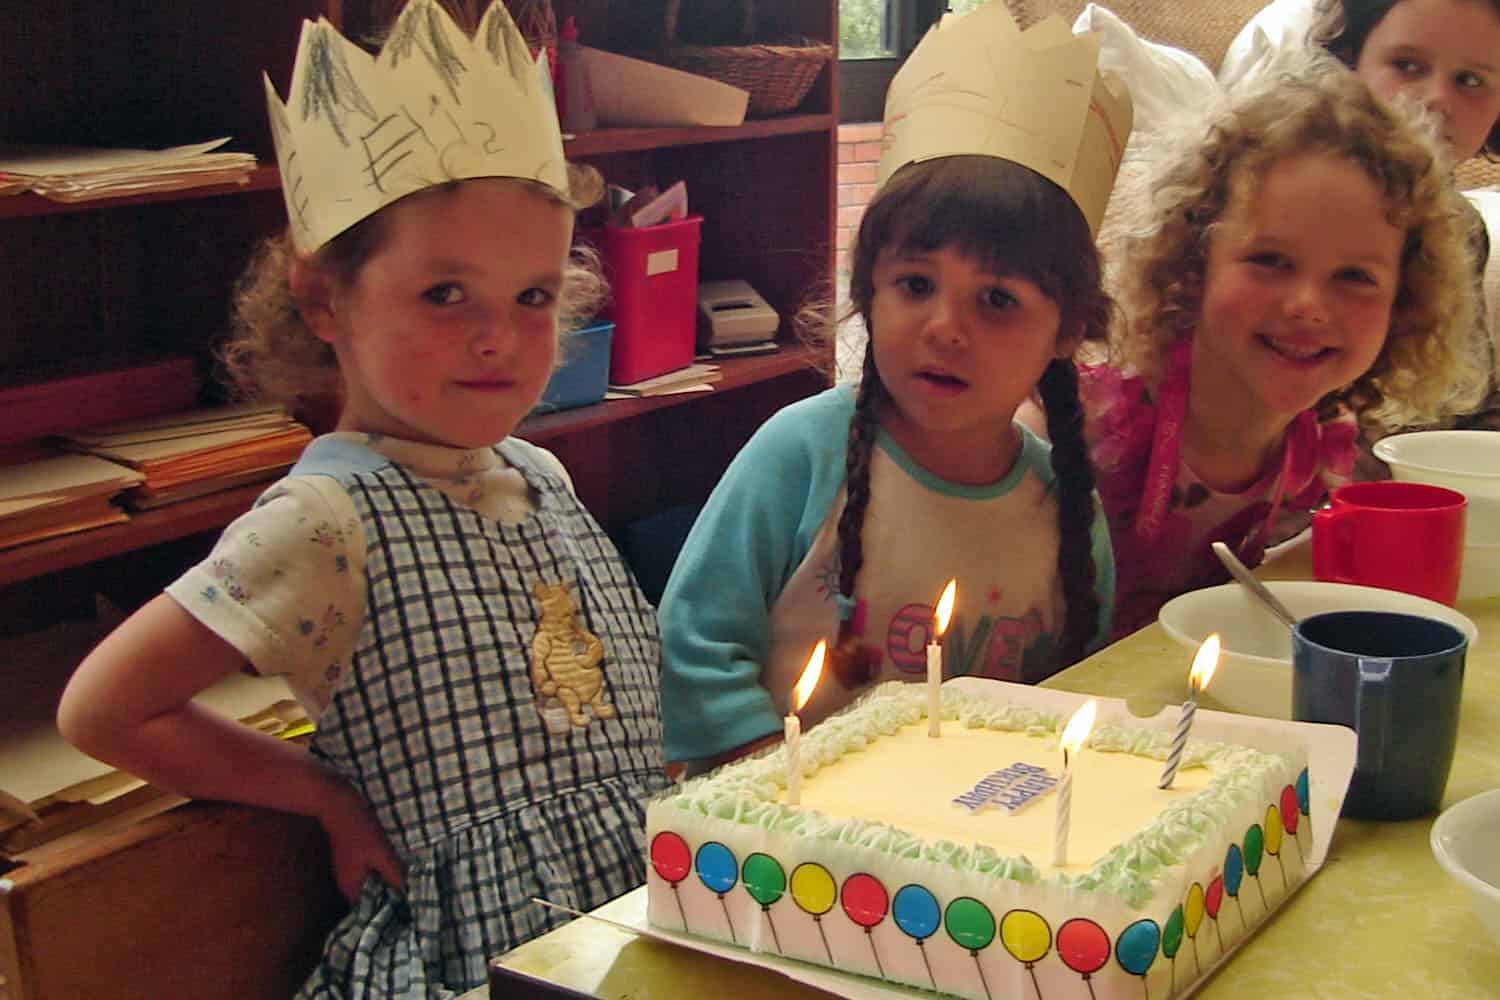 birthday cake 4 years old